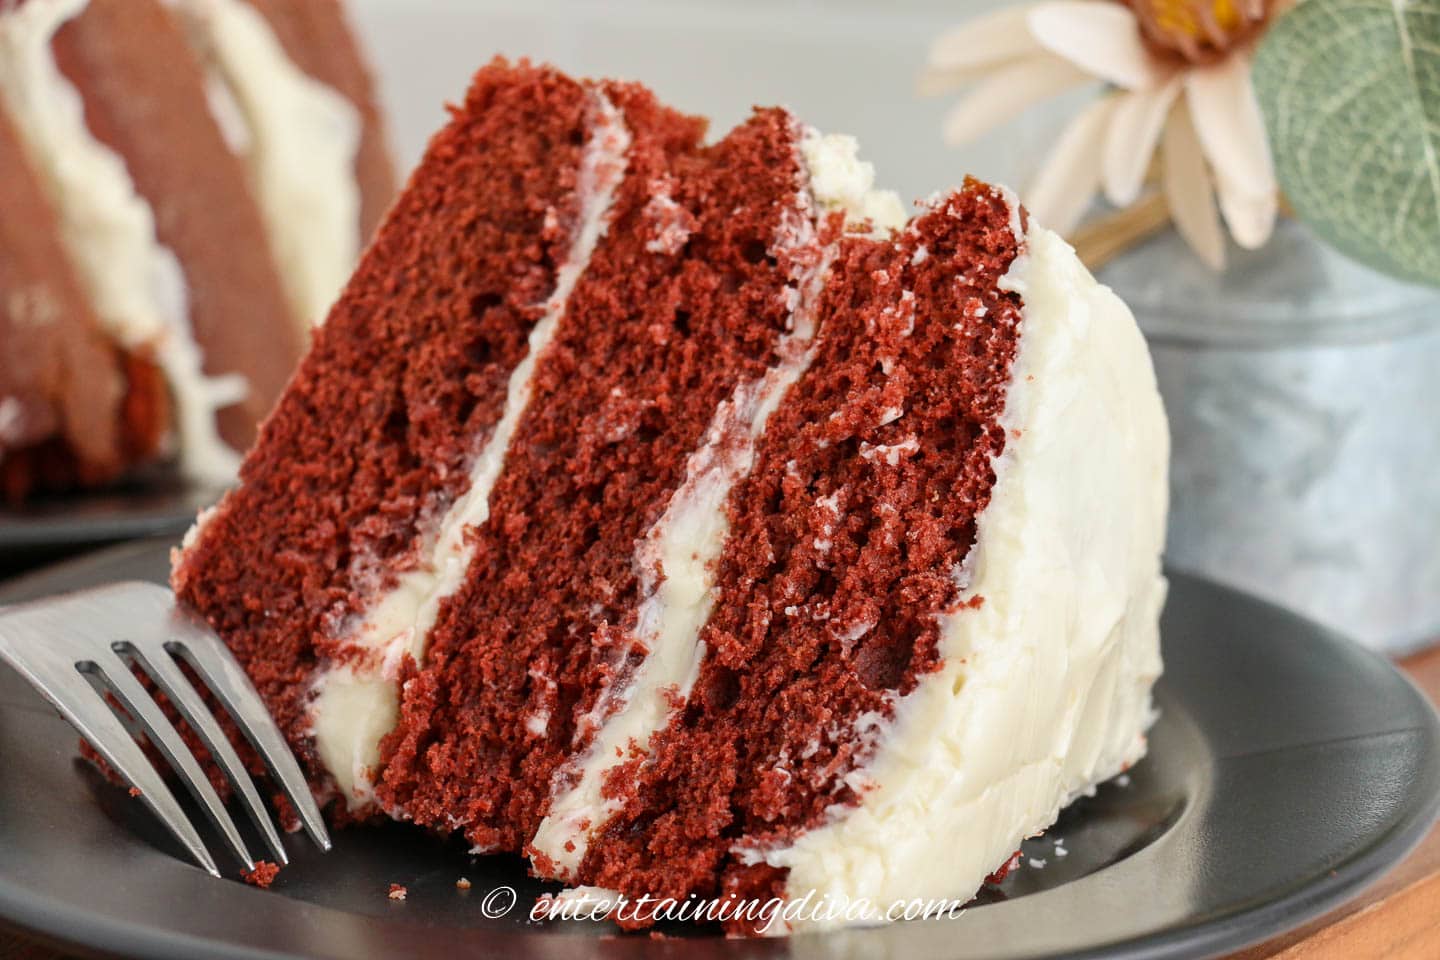 A slice of red velvet cake on a plate